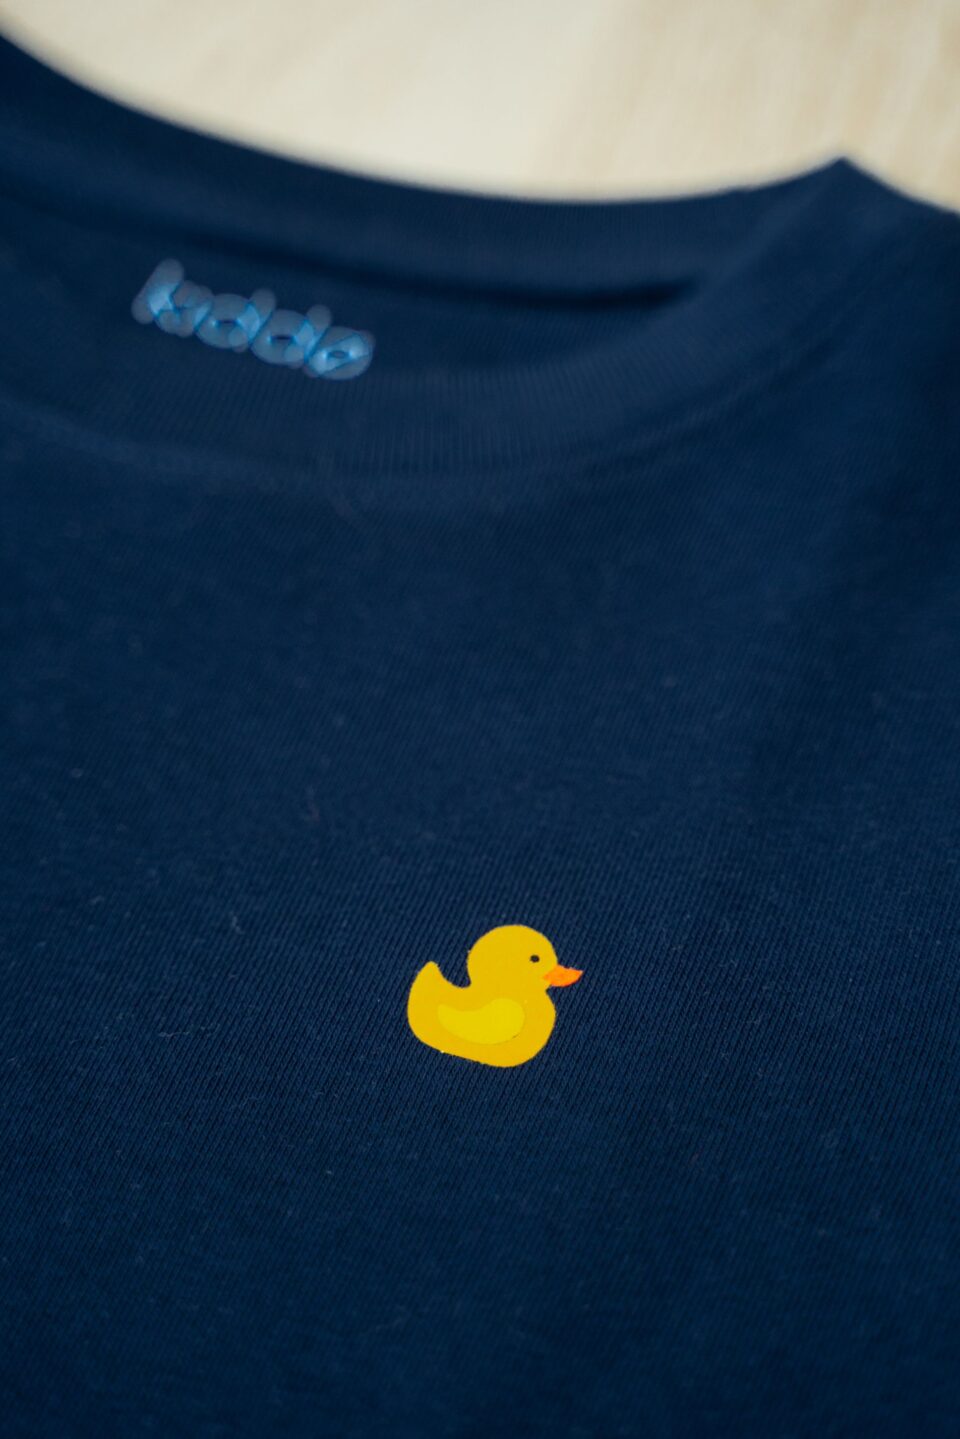 Kiddo_Kids Sweater_Minimal_Navy Blue_Yellow Duck